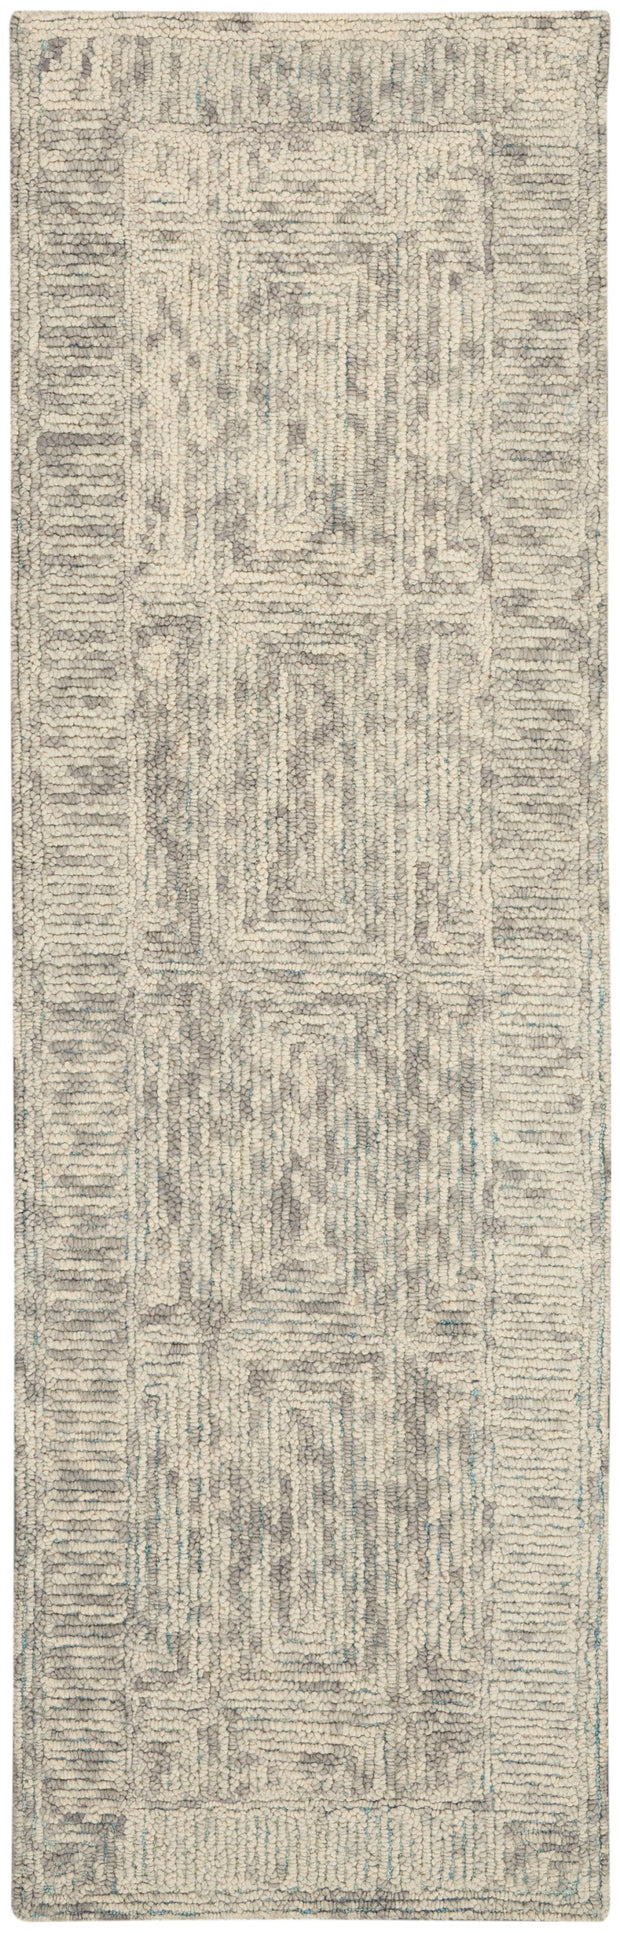 colorado handmade ivory grey teal rug by nourison 99446786609 redo 2